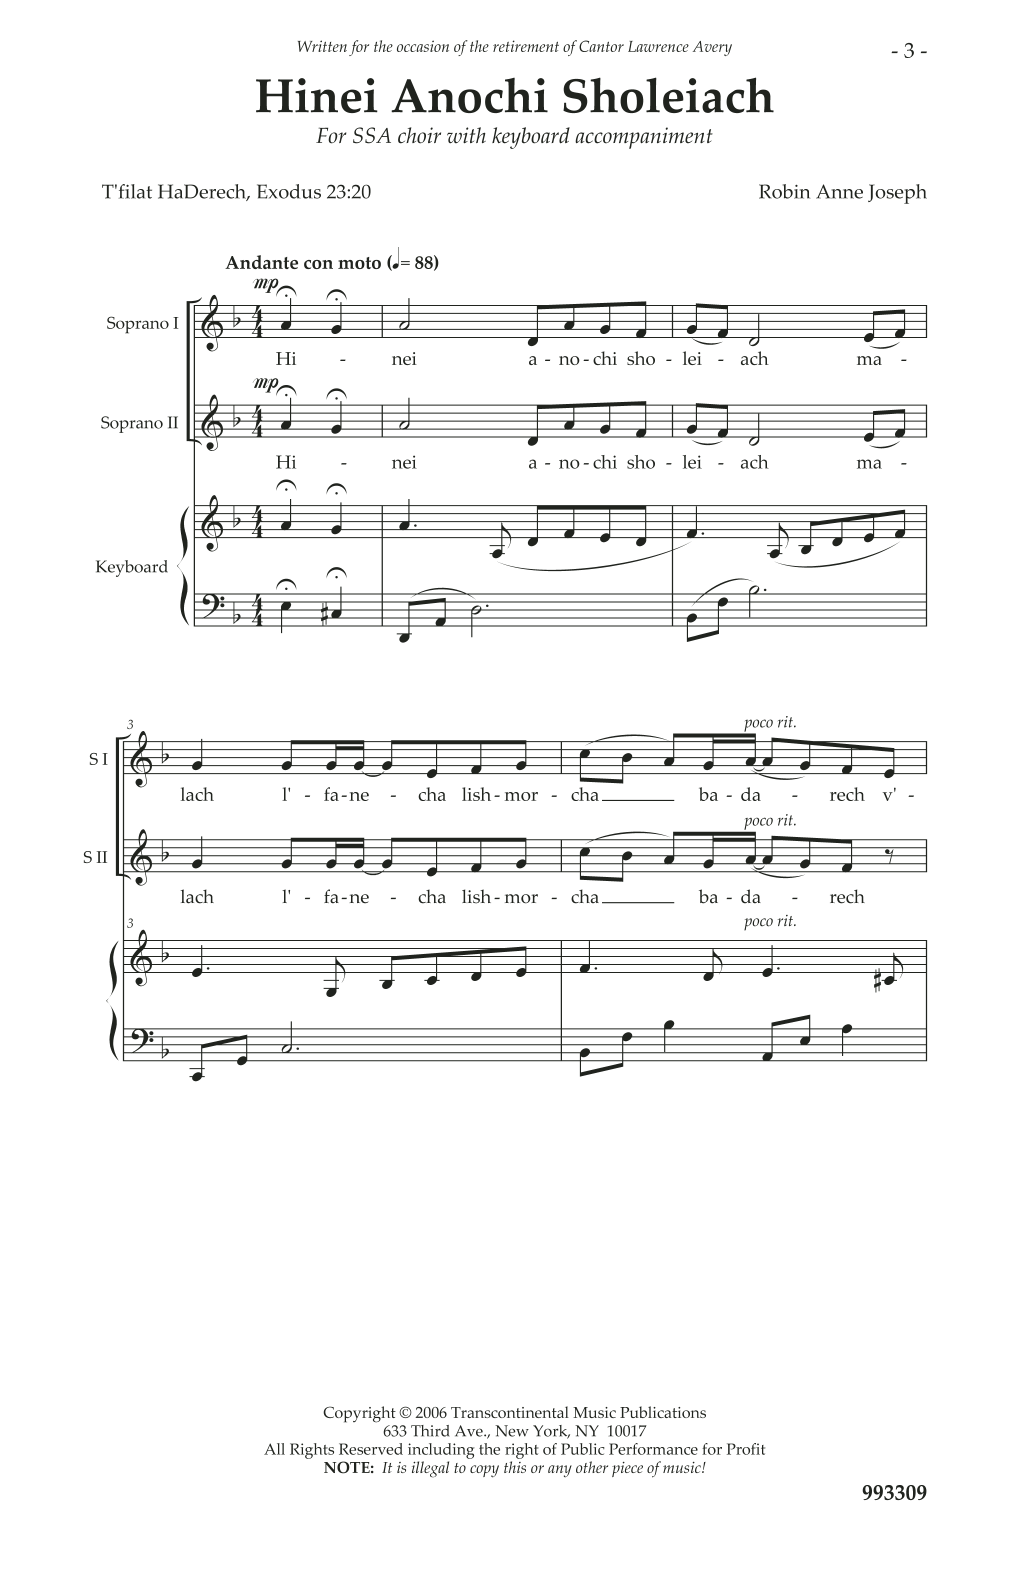 Anne Joseph Hinei Anochi Sholeiach Sheet Music Notes & Chords for SSA - Download or Print PDF